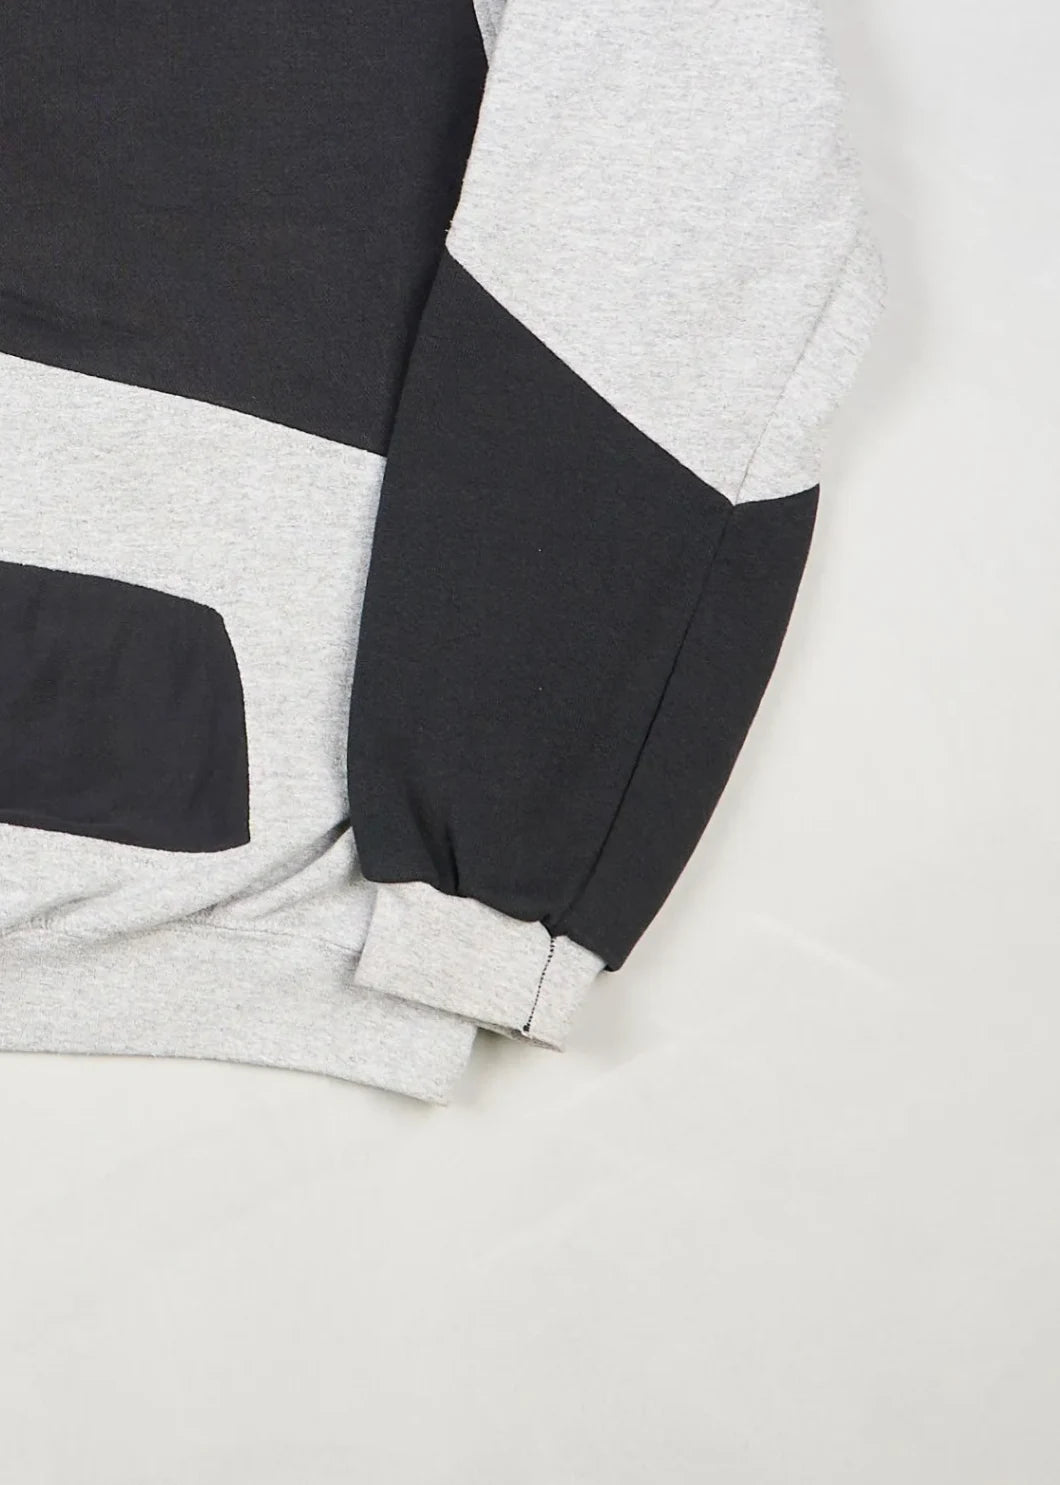 Nike - Sweatshirt (M) Bottom Right